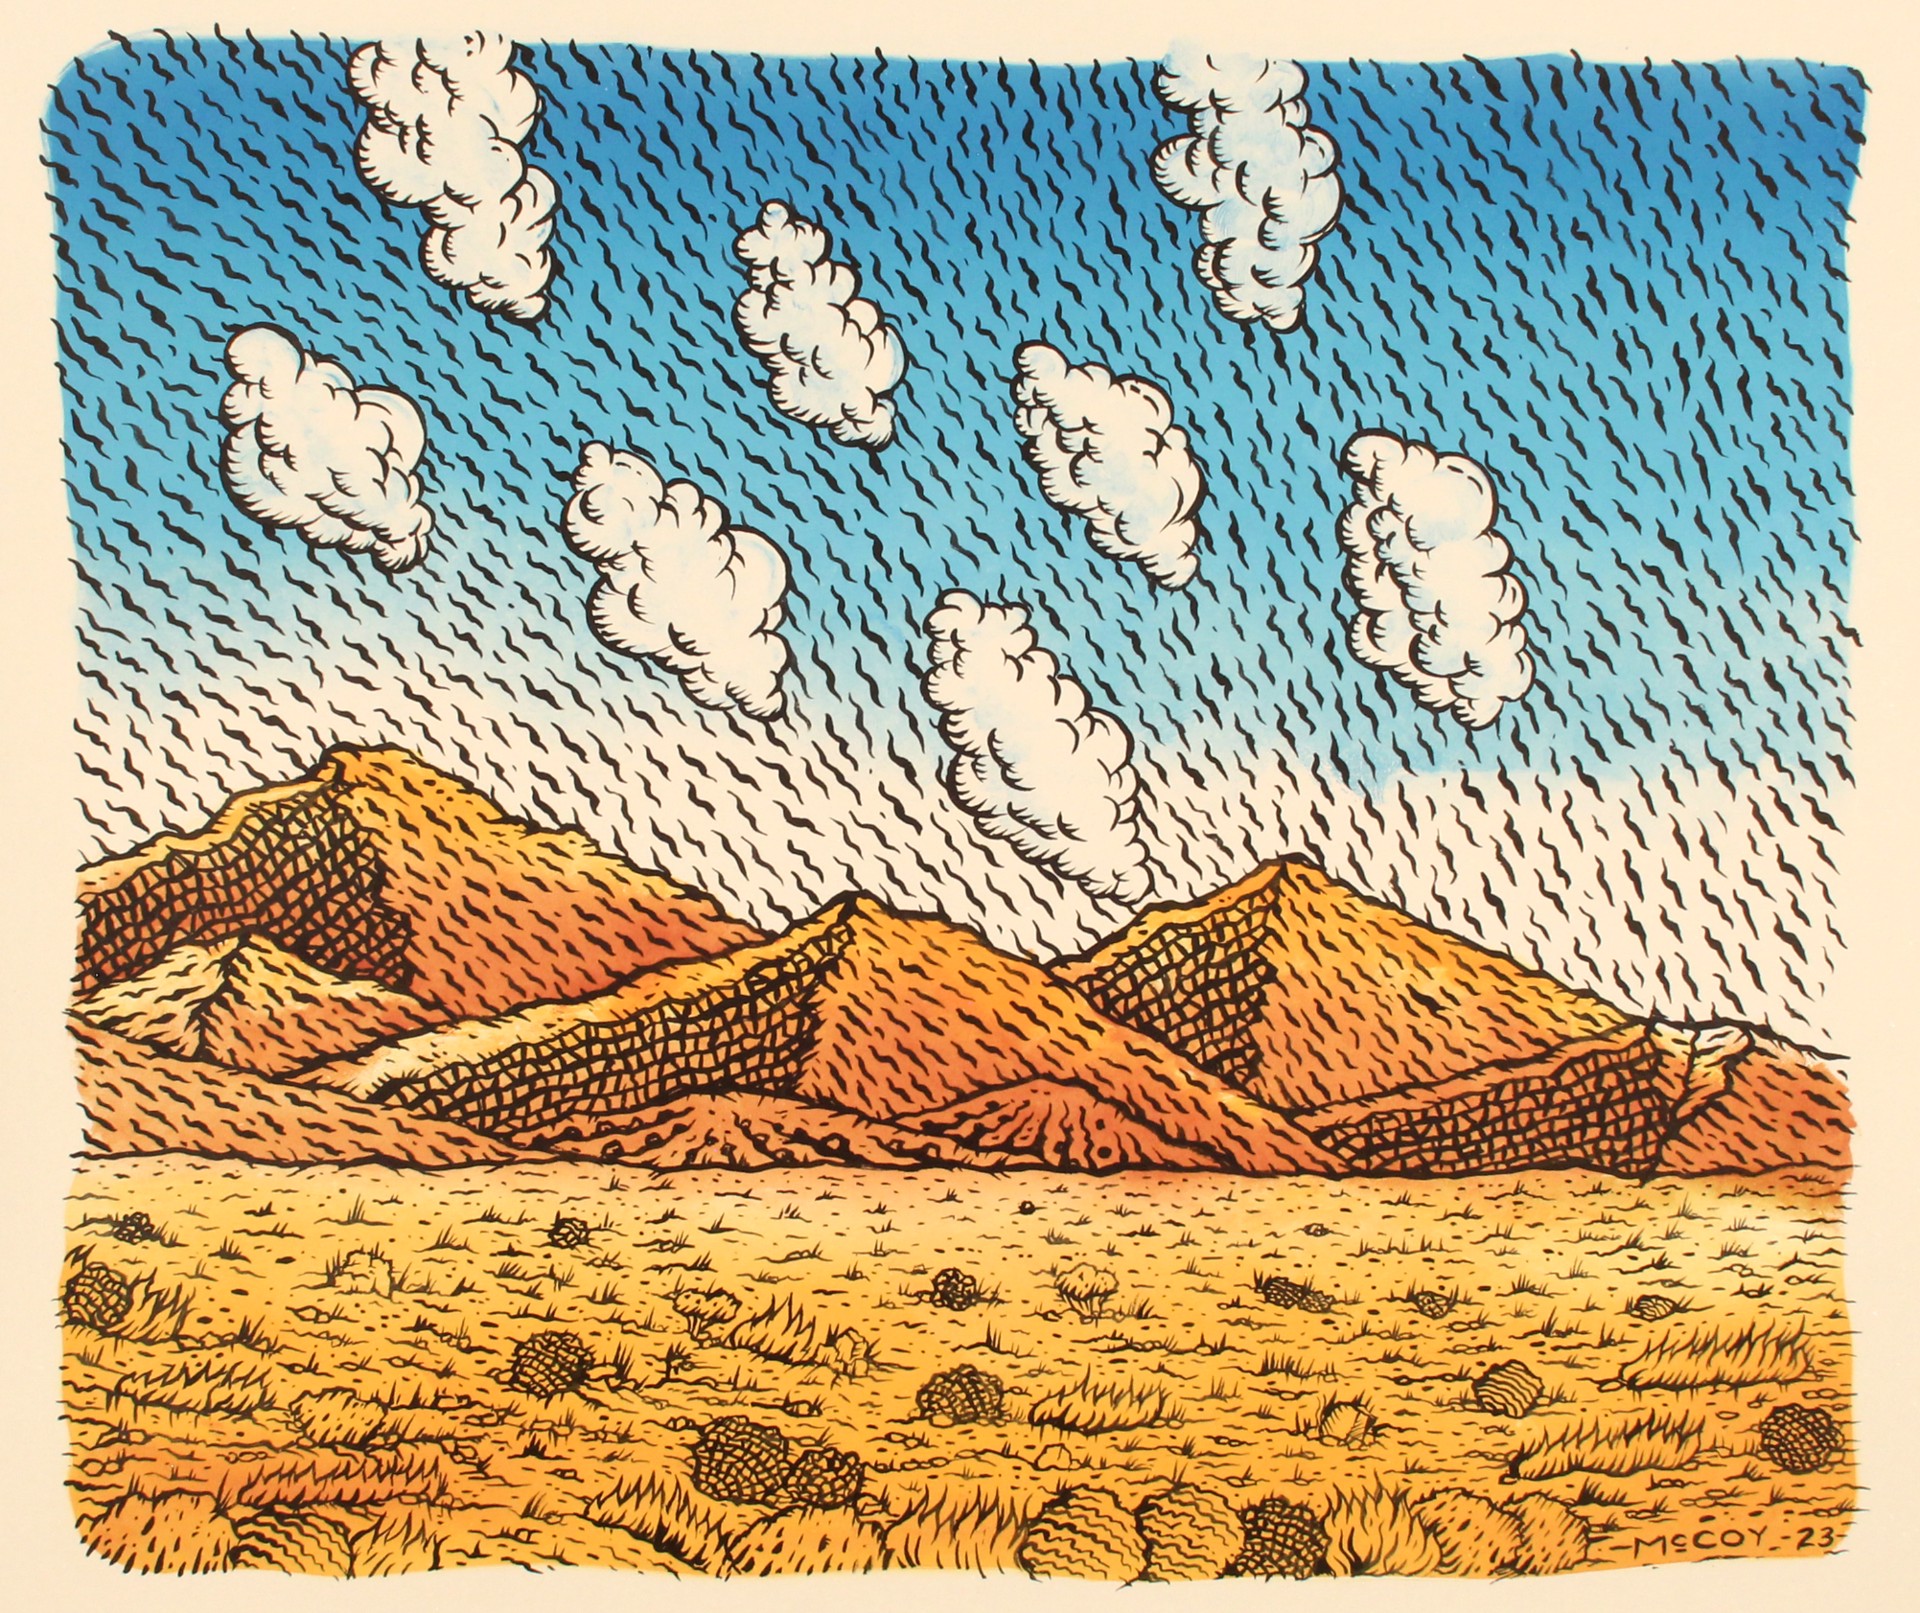 The High Desert by Daniel McCoy